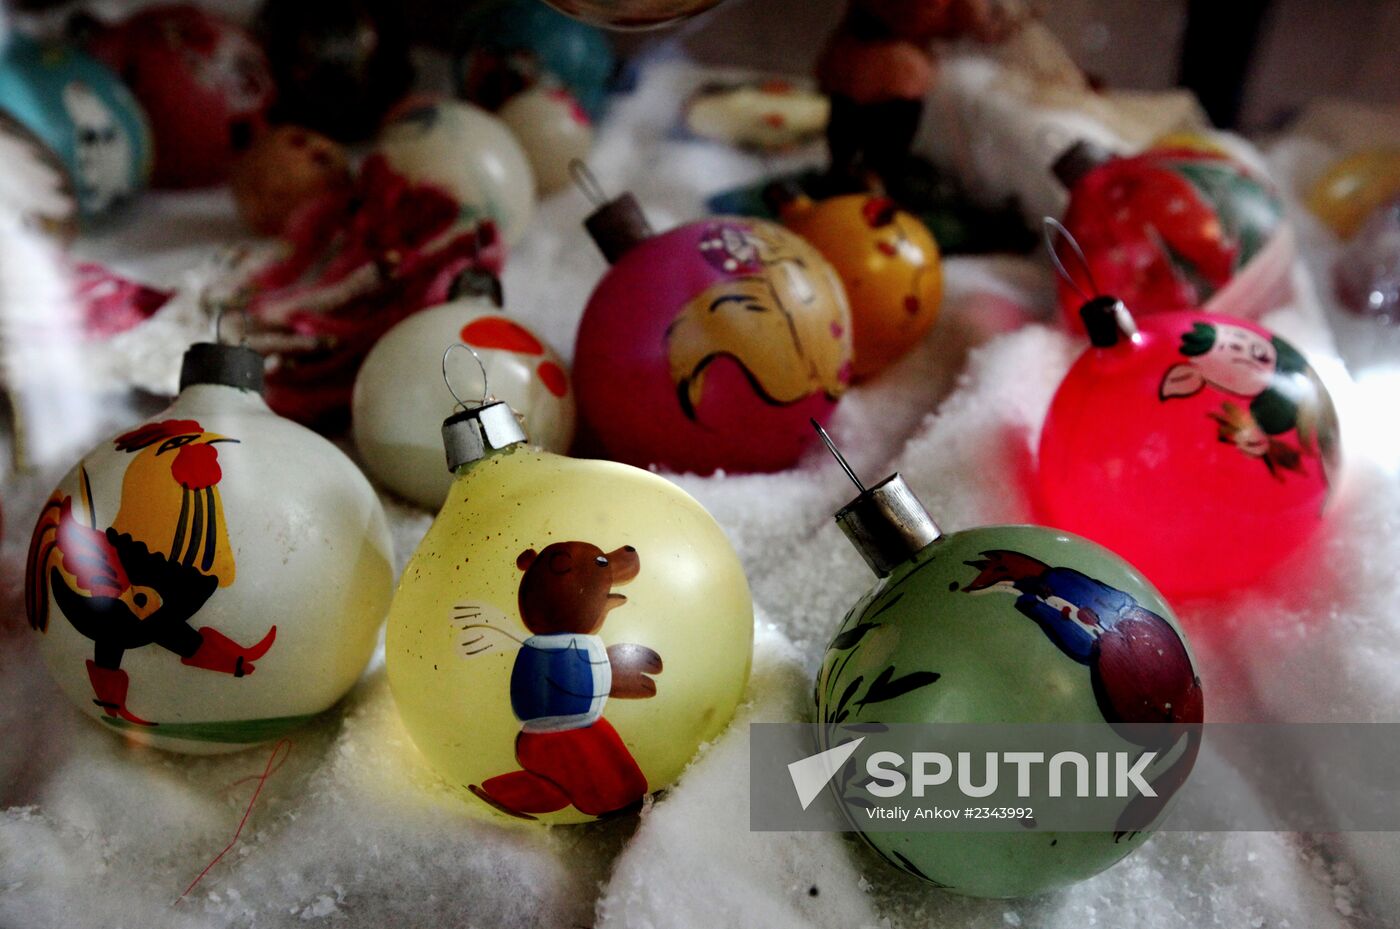 Soviet-era Christmas tree decorations on display in Vladivostok